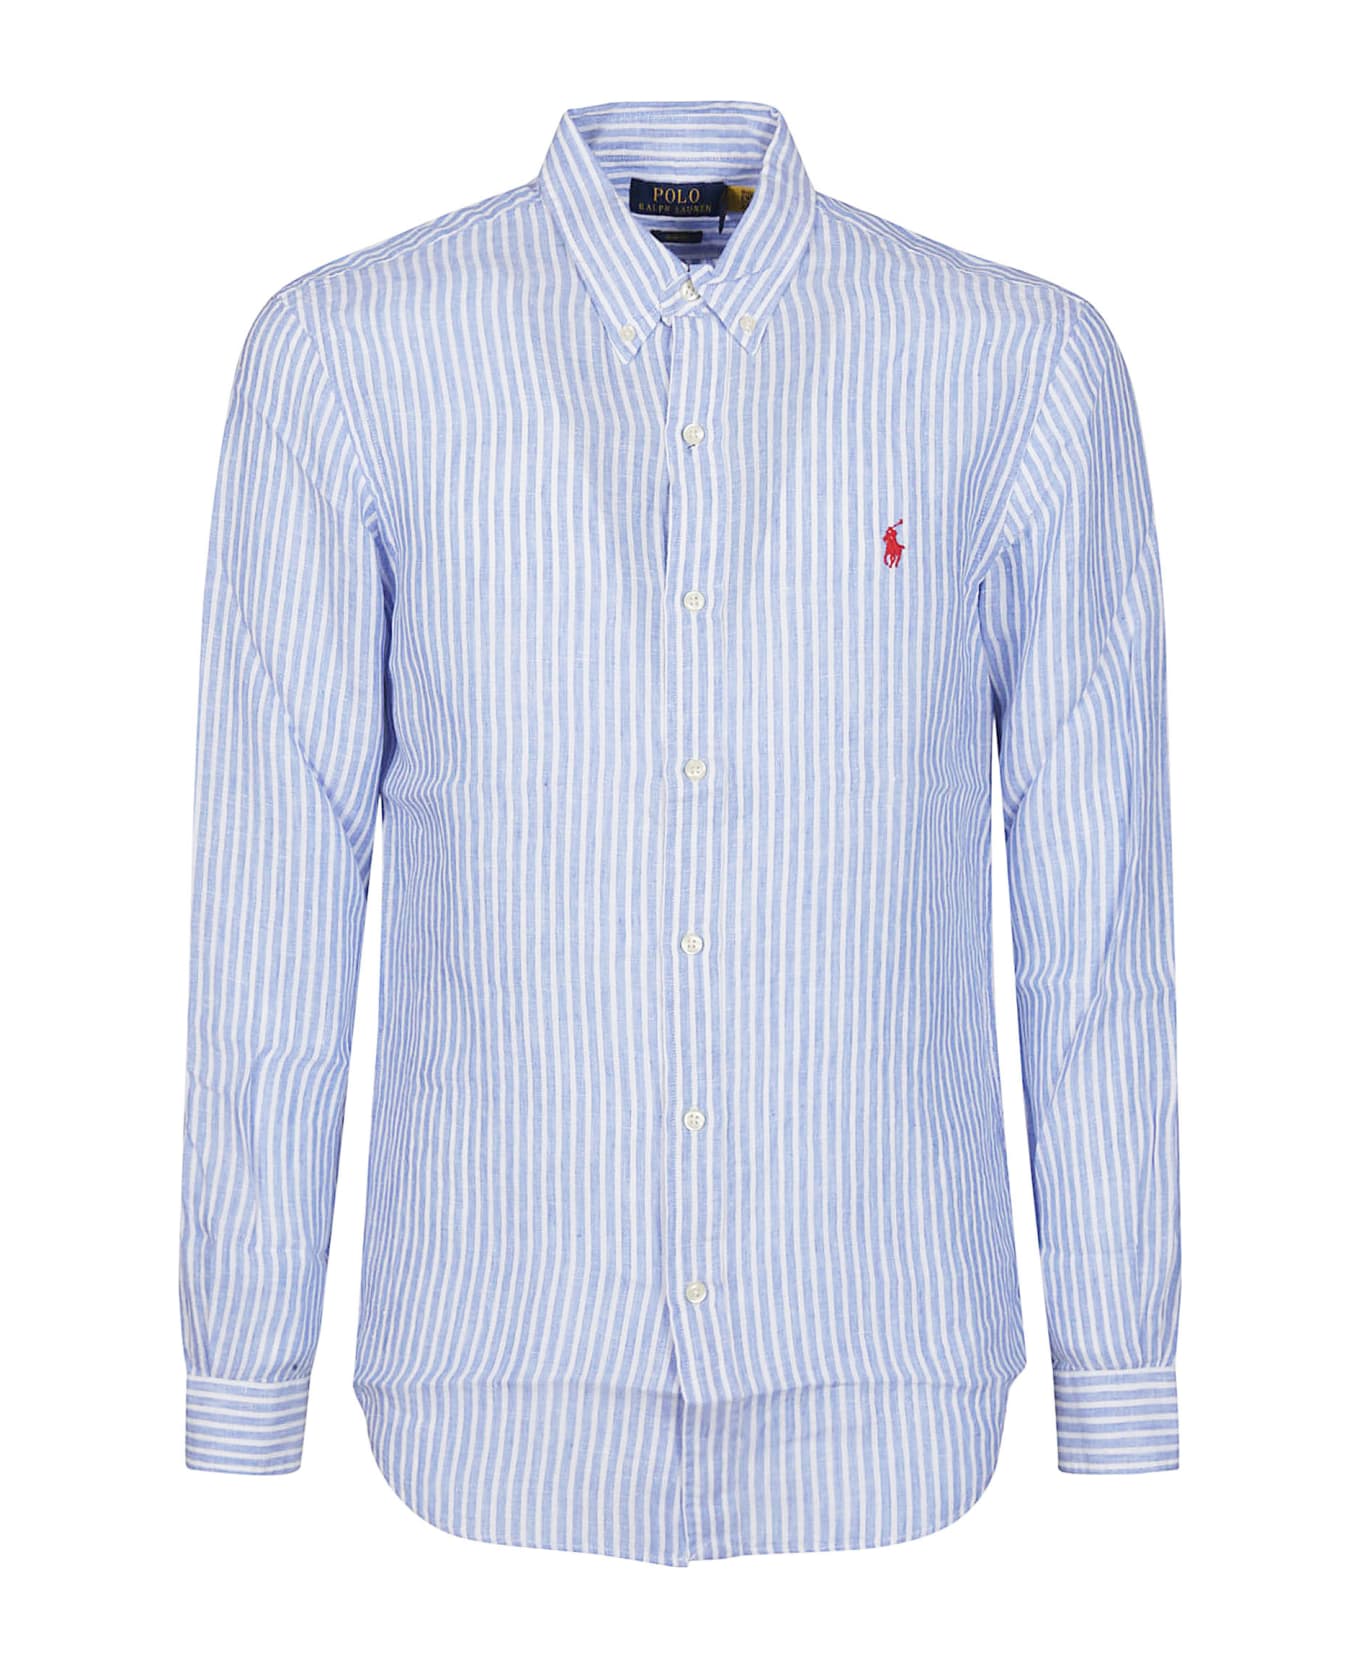 Polo Ralph Lauren Long Sleeve Sport Shirt - Blue/white